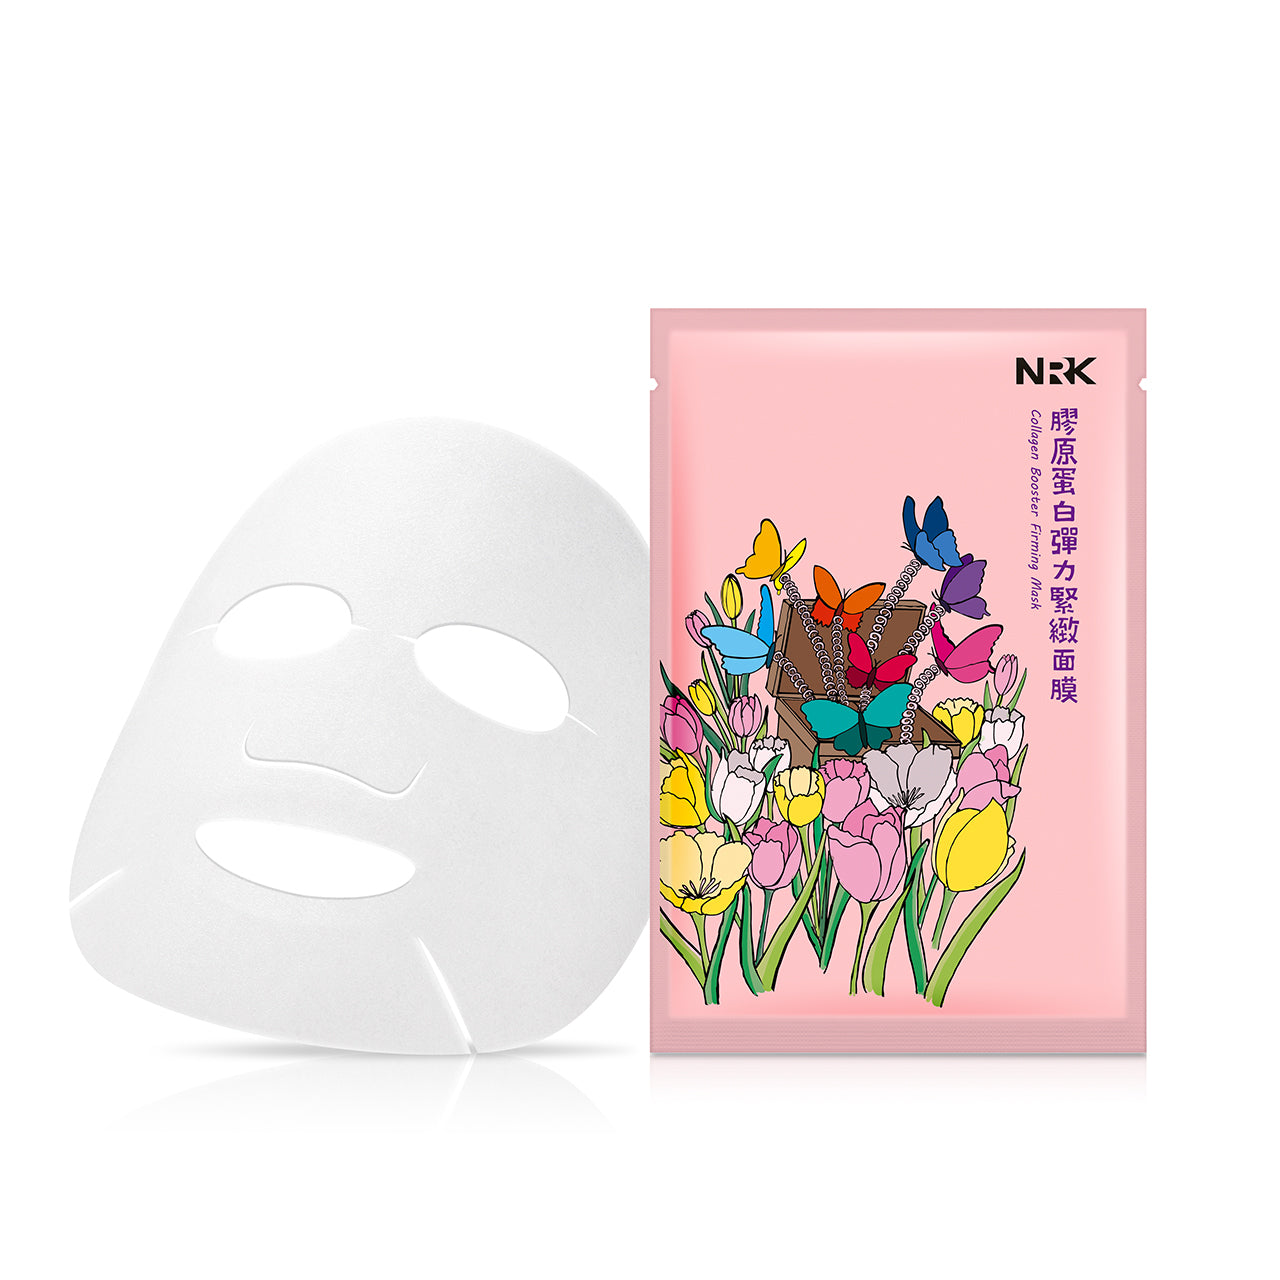 Collagen Firming Mask